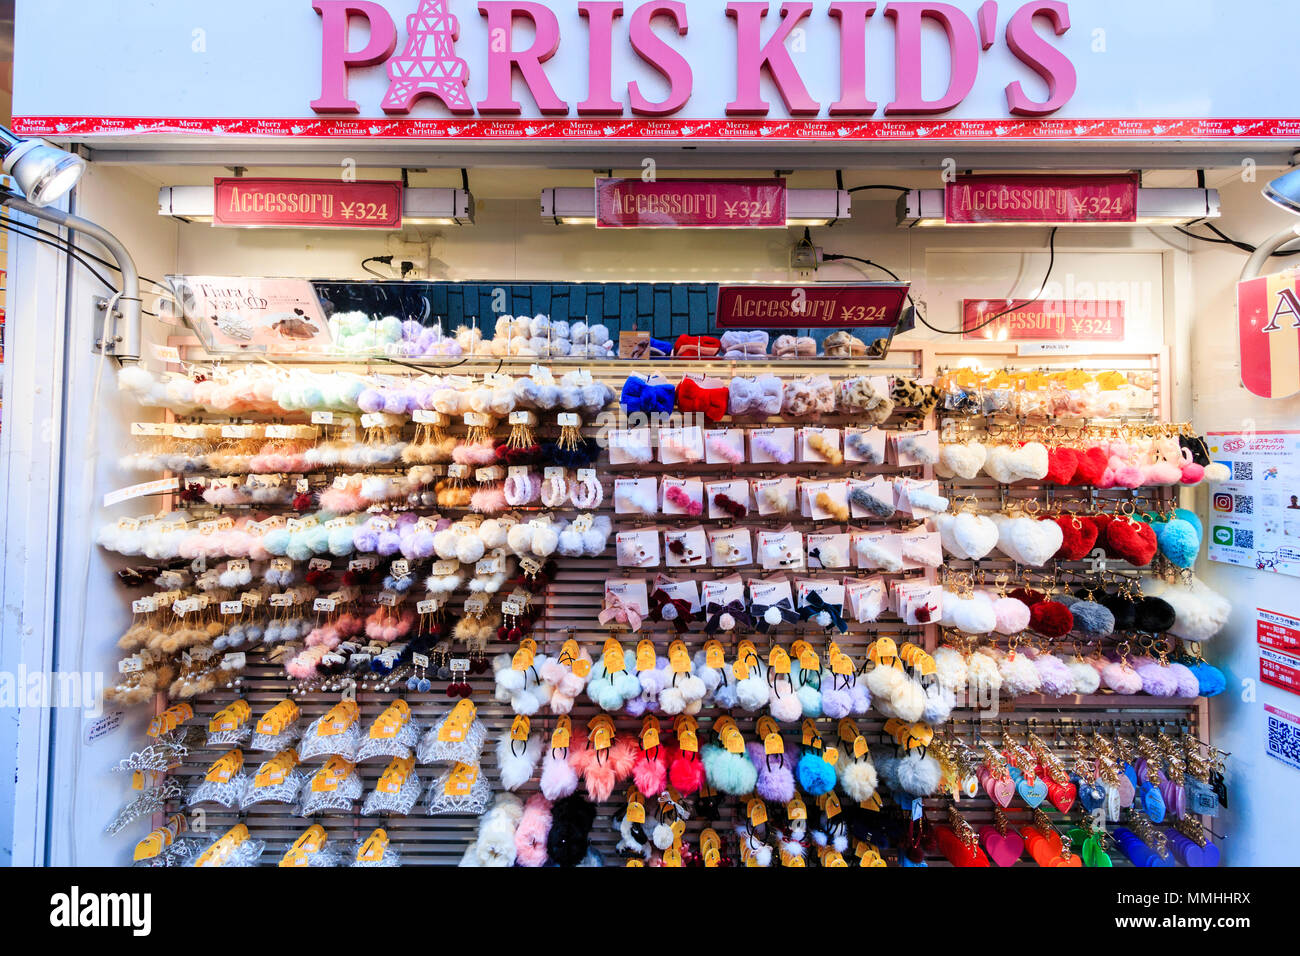 Tokyo, Harajuku, Takeshita street. Paris Kids, famous fashion store, shop front, display of rows of Women's fashion accessories. Stock Photo